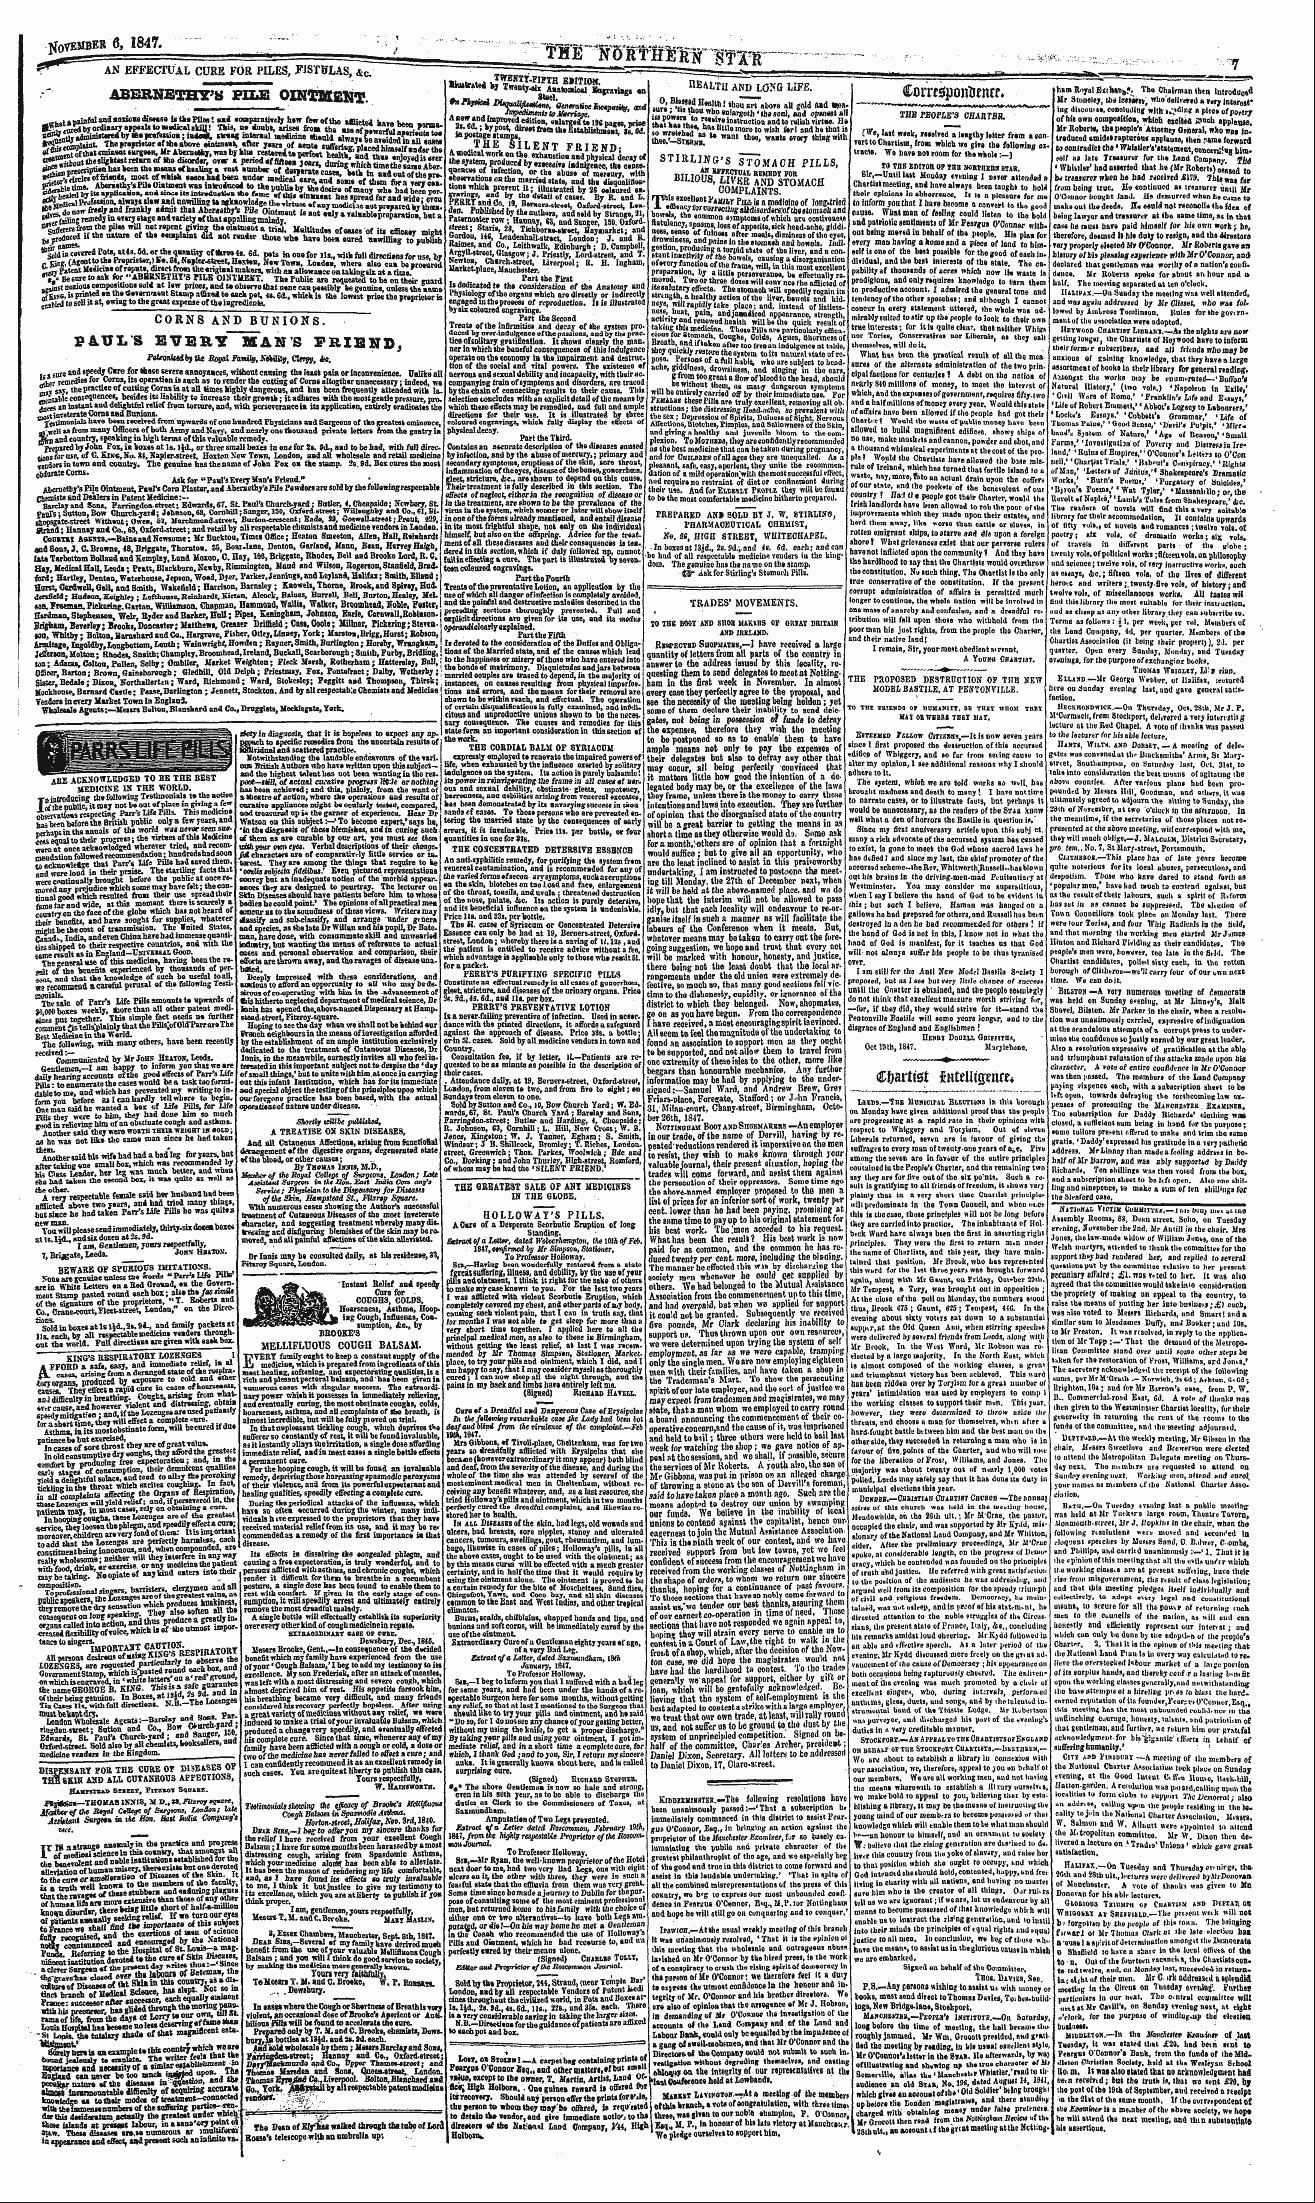 Northern Star (1837-1852): jS F Y, 3rd edition - Ad00719